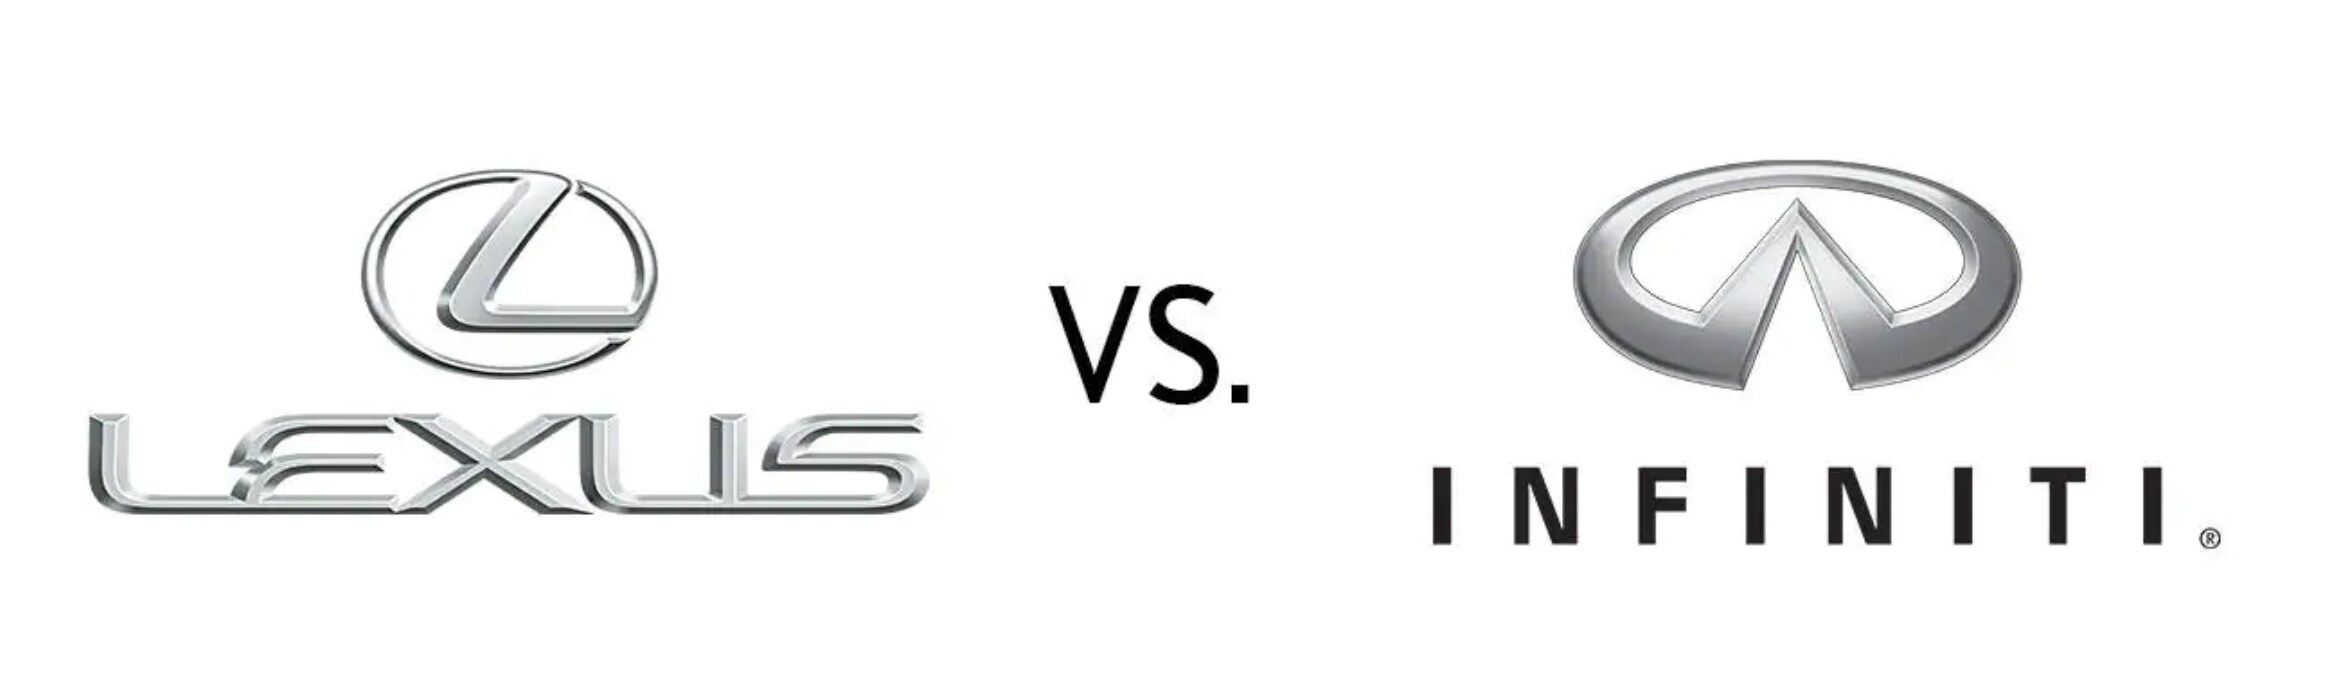 Lexus vs Infiniti